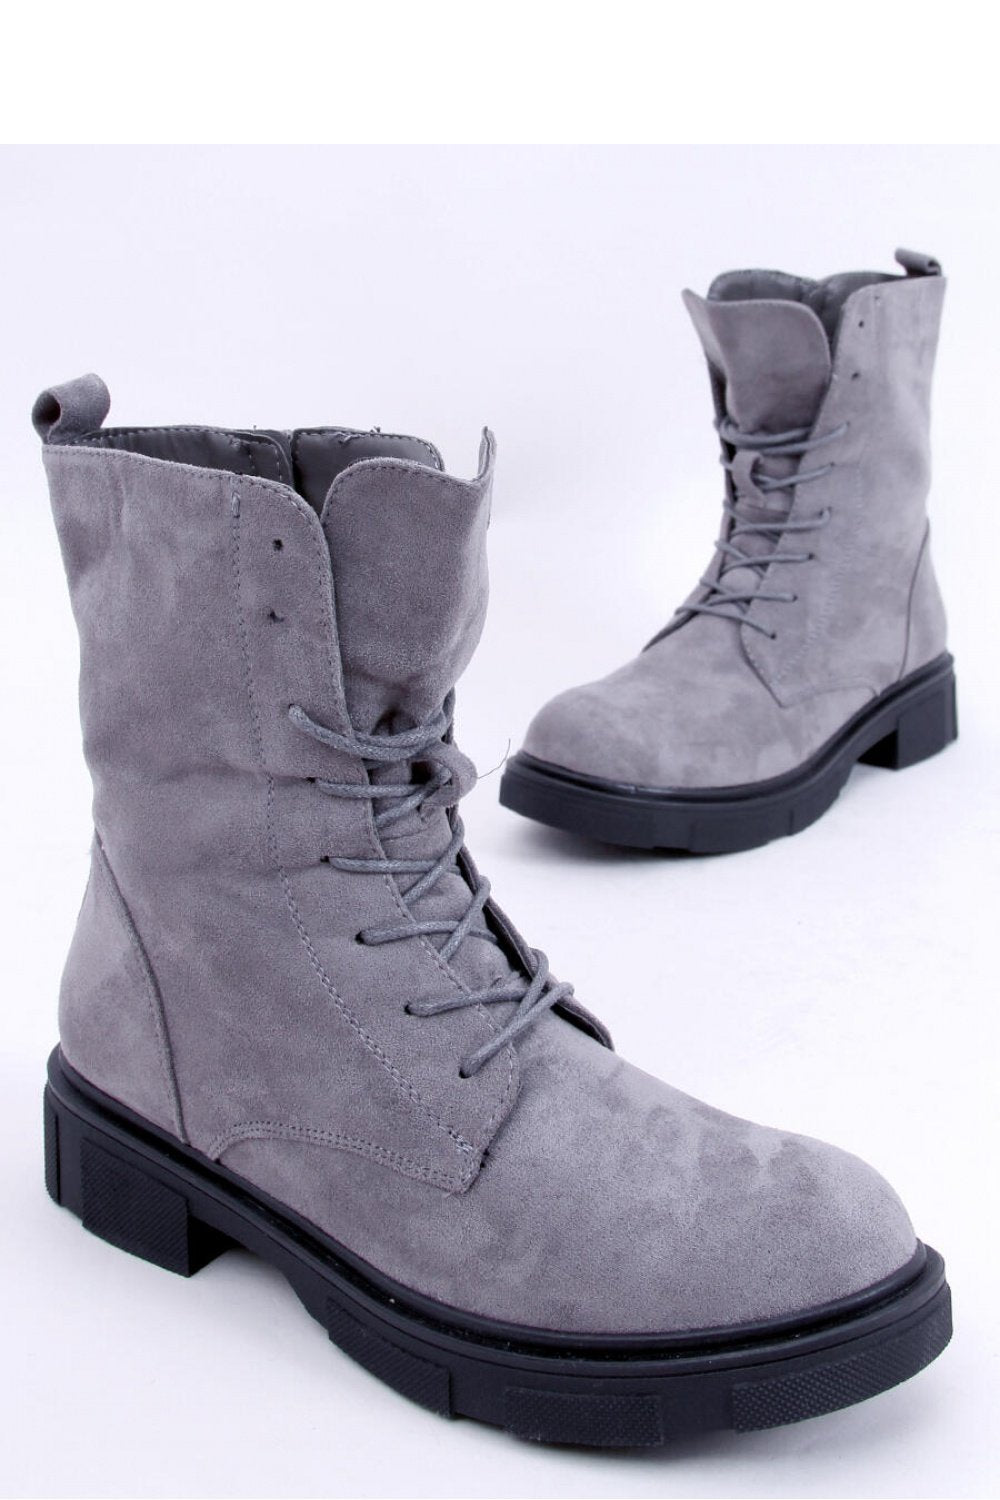 Boots model 172857 Inello Posh Styles Apparel